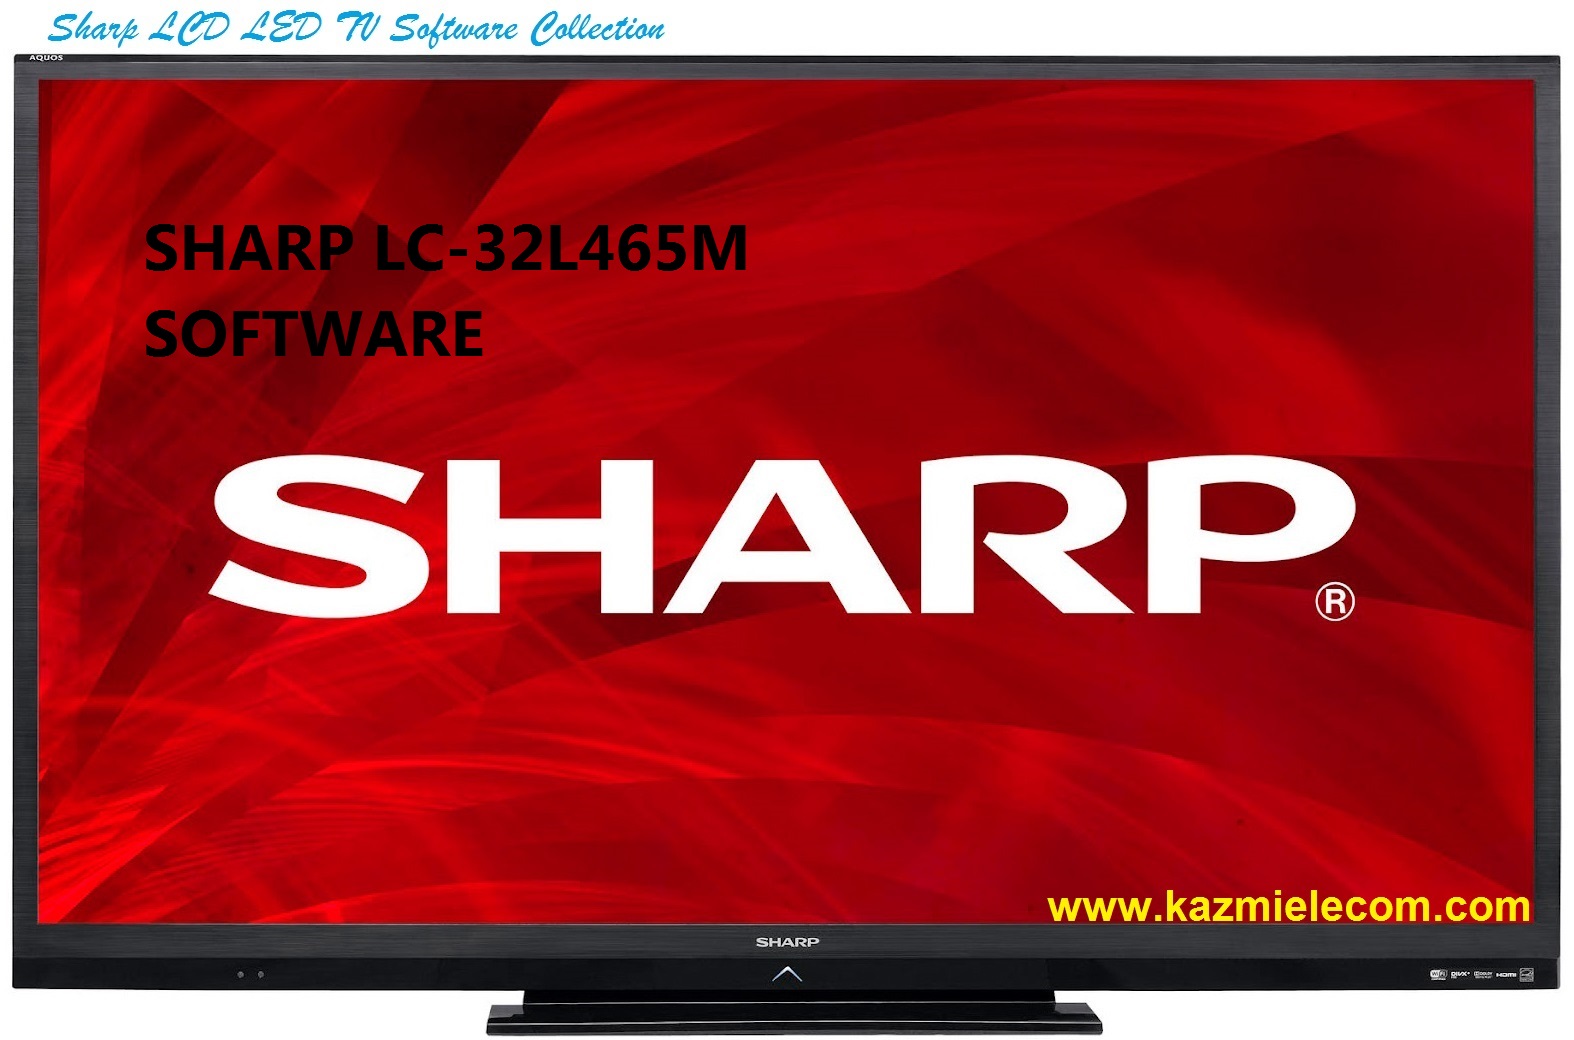 Sharp Lc-32L465M